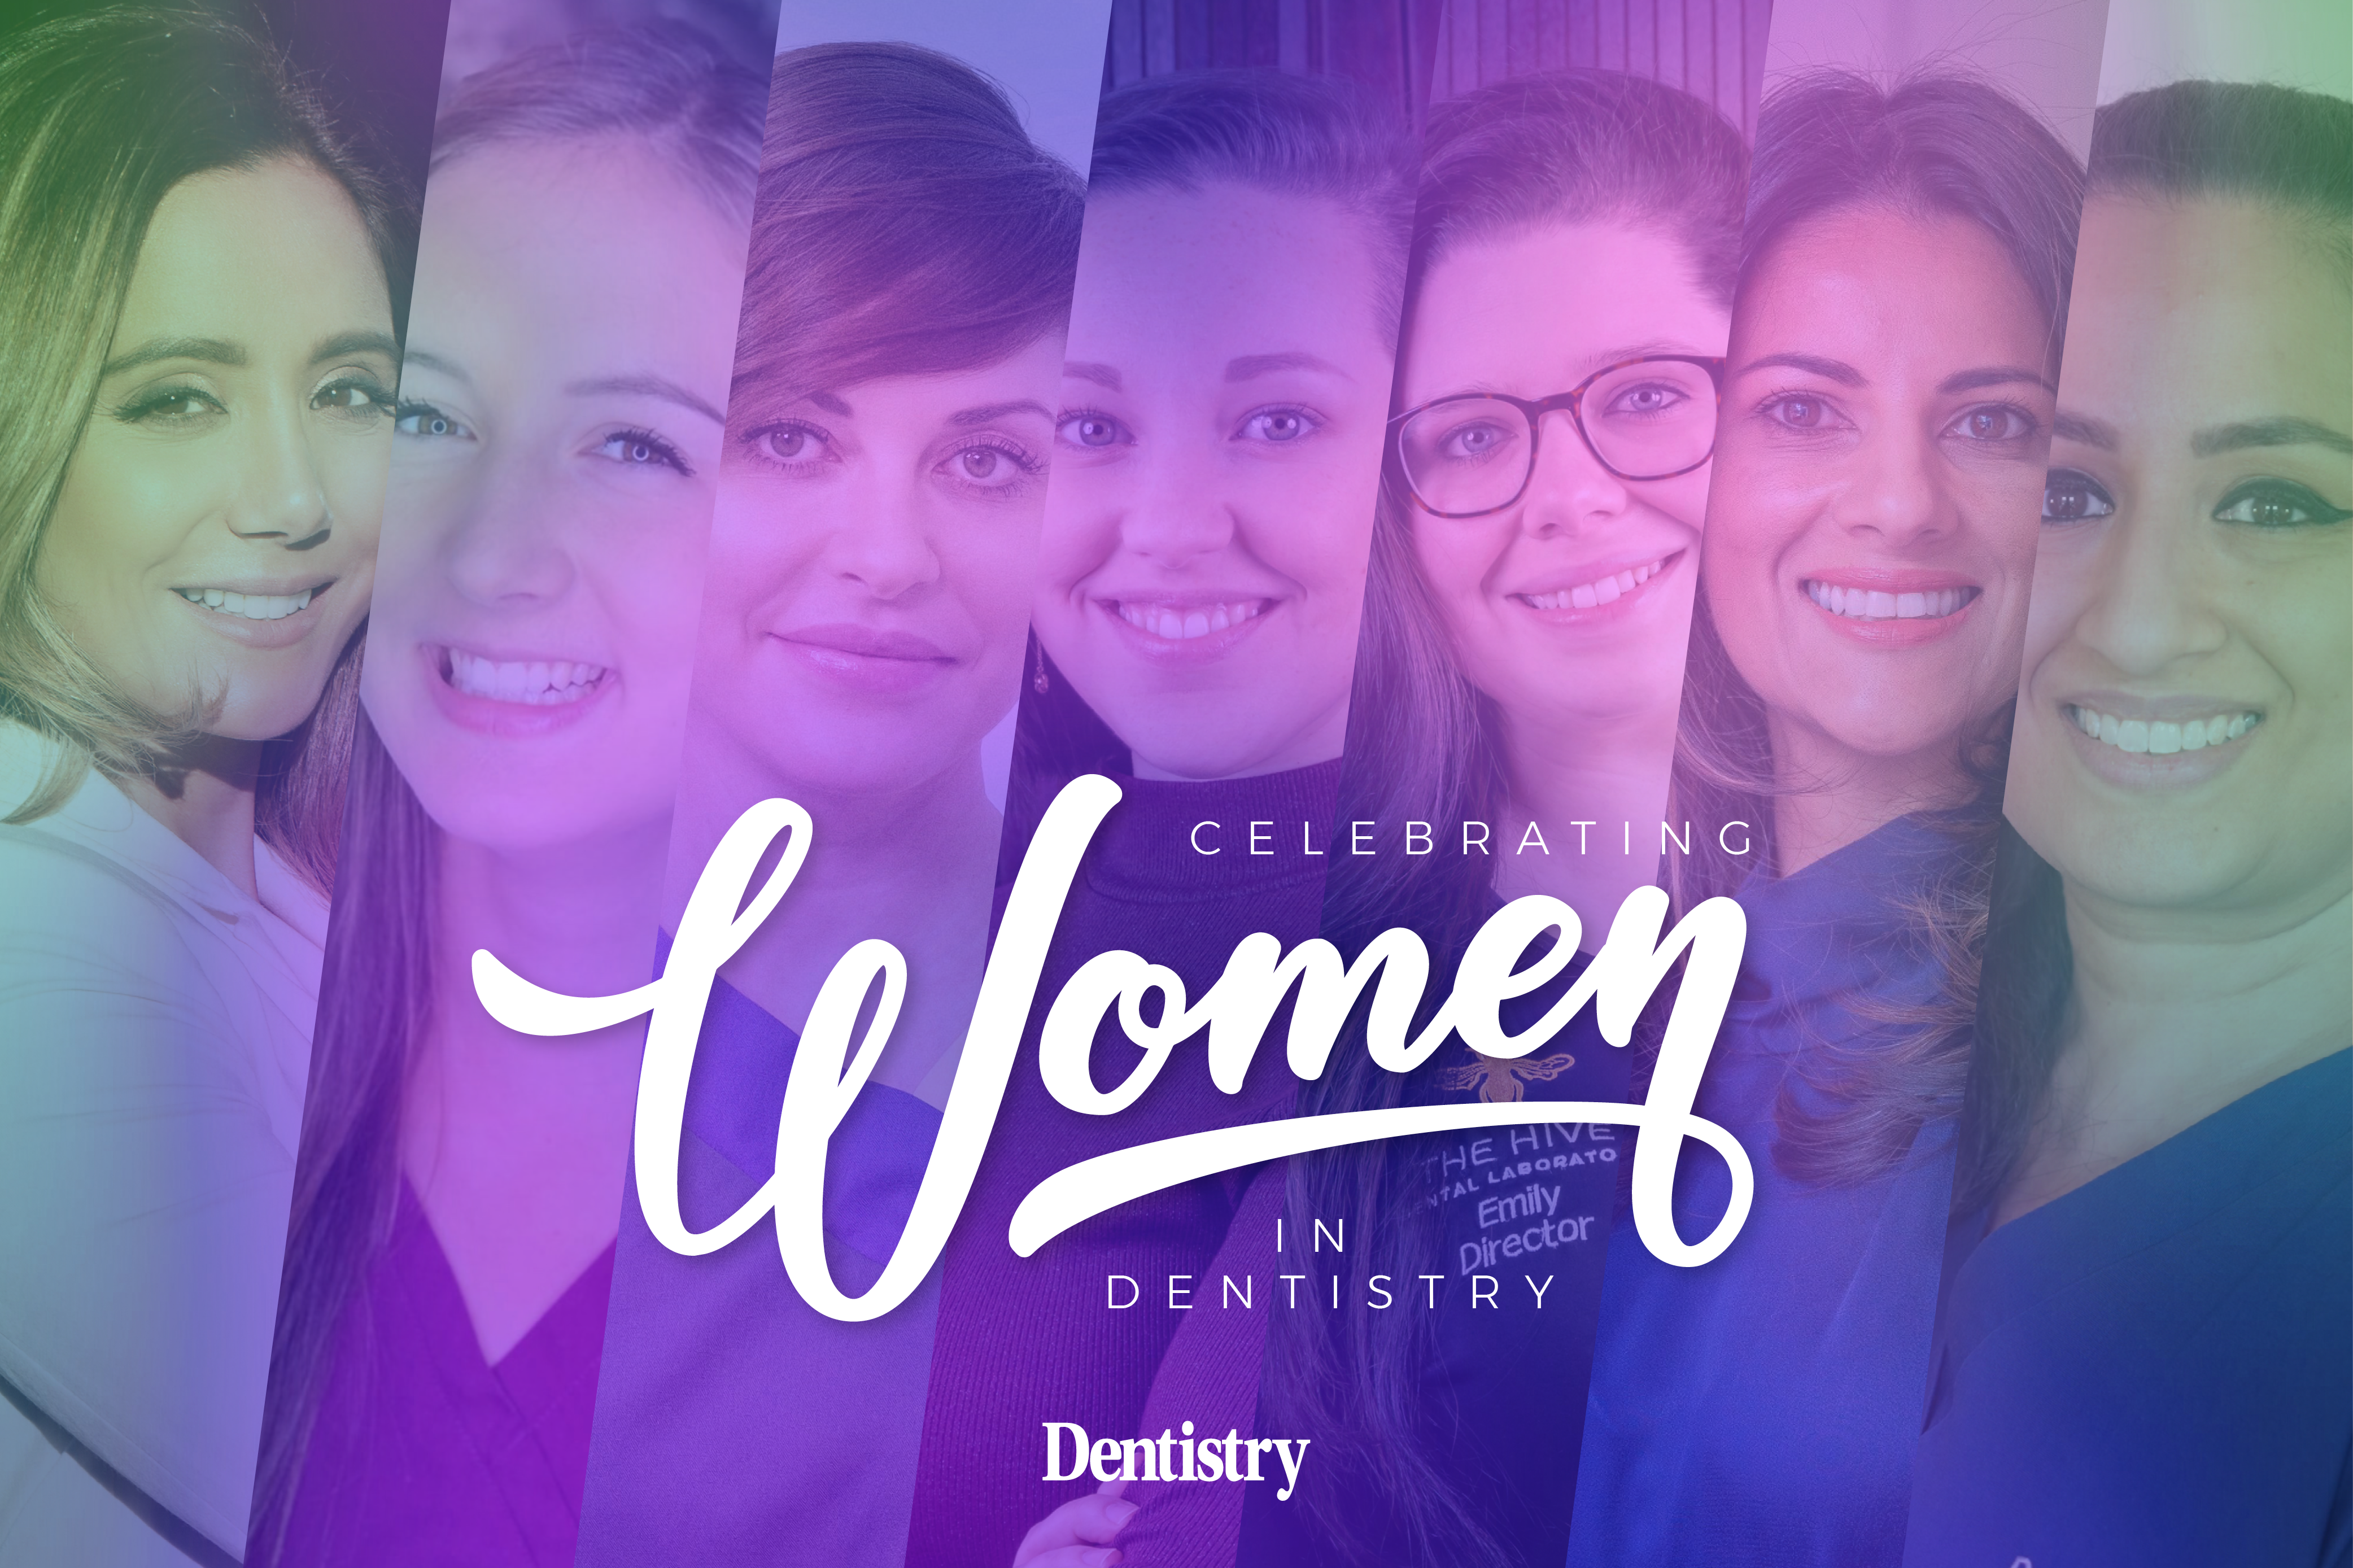 Celebrating women in dentistry